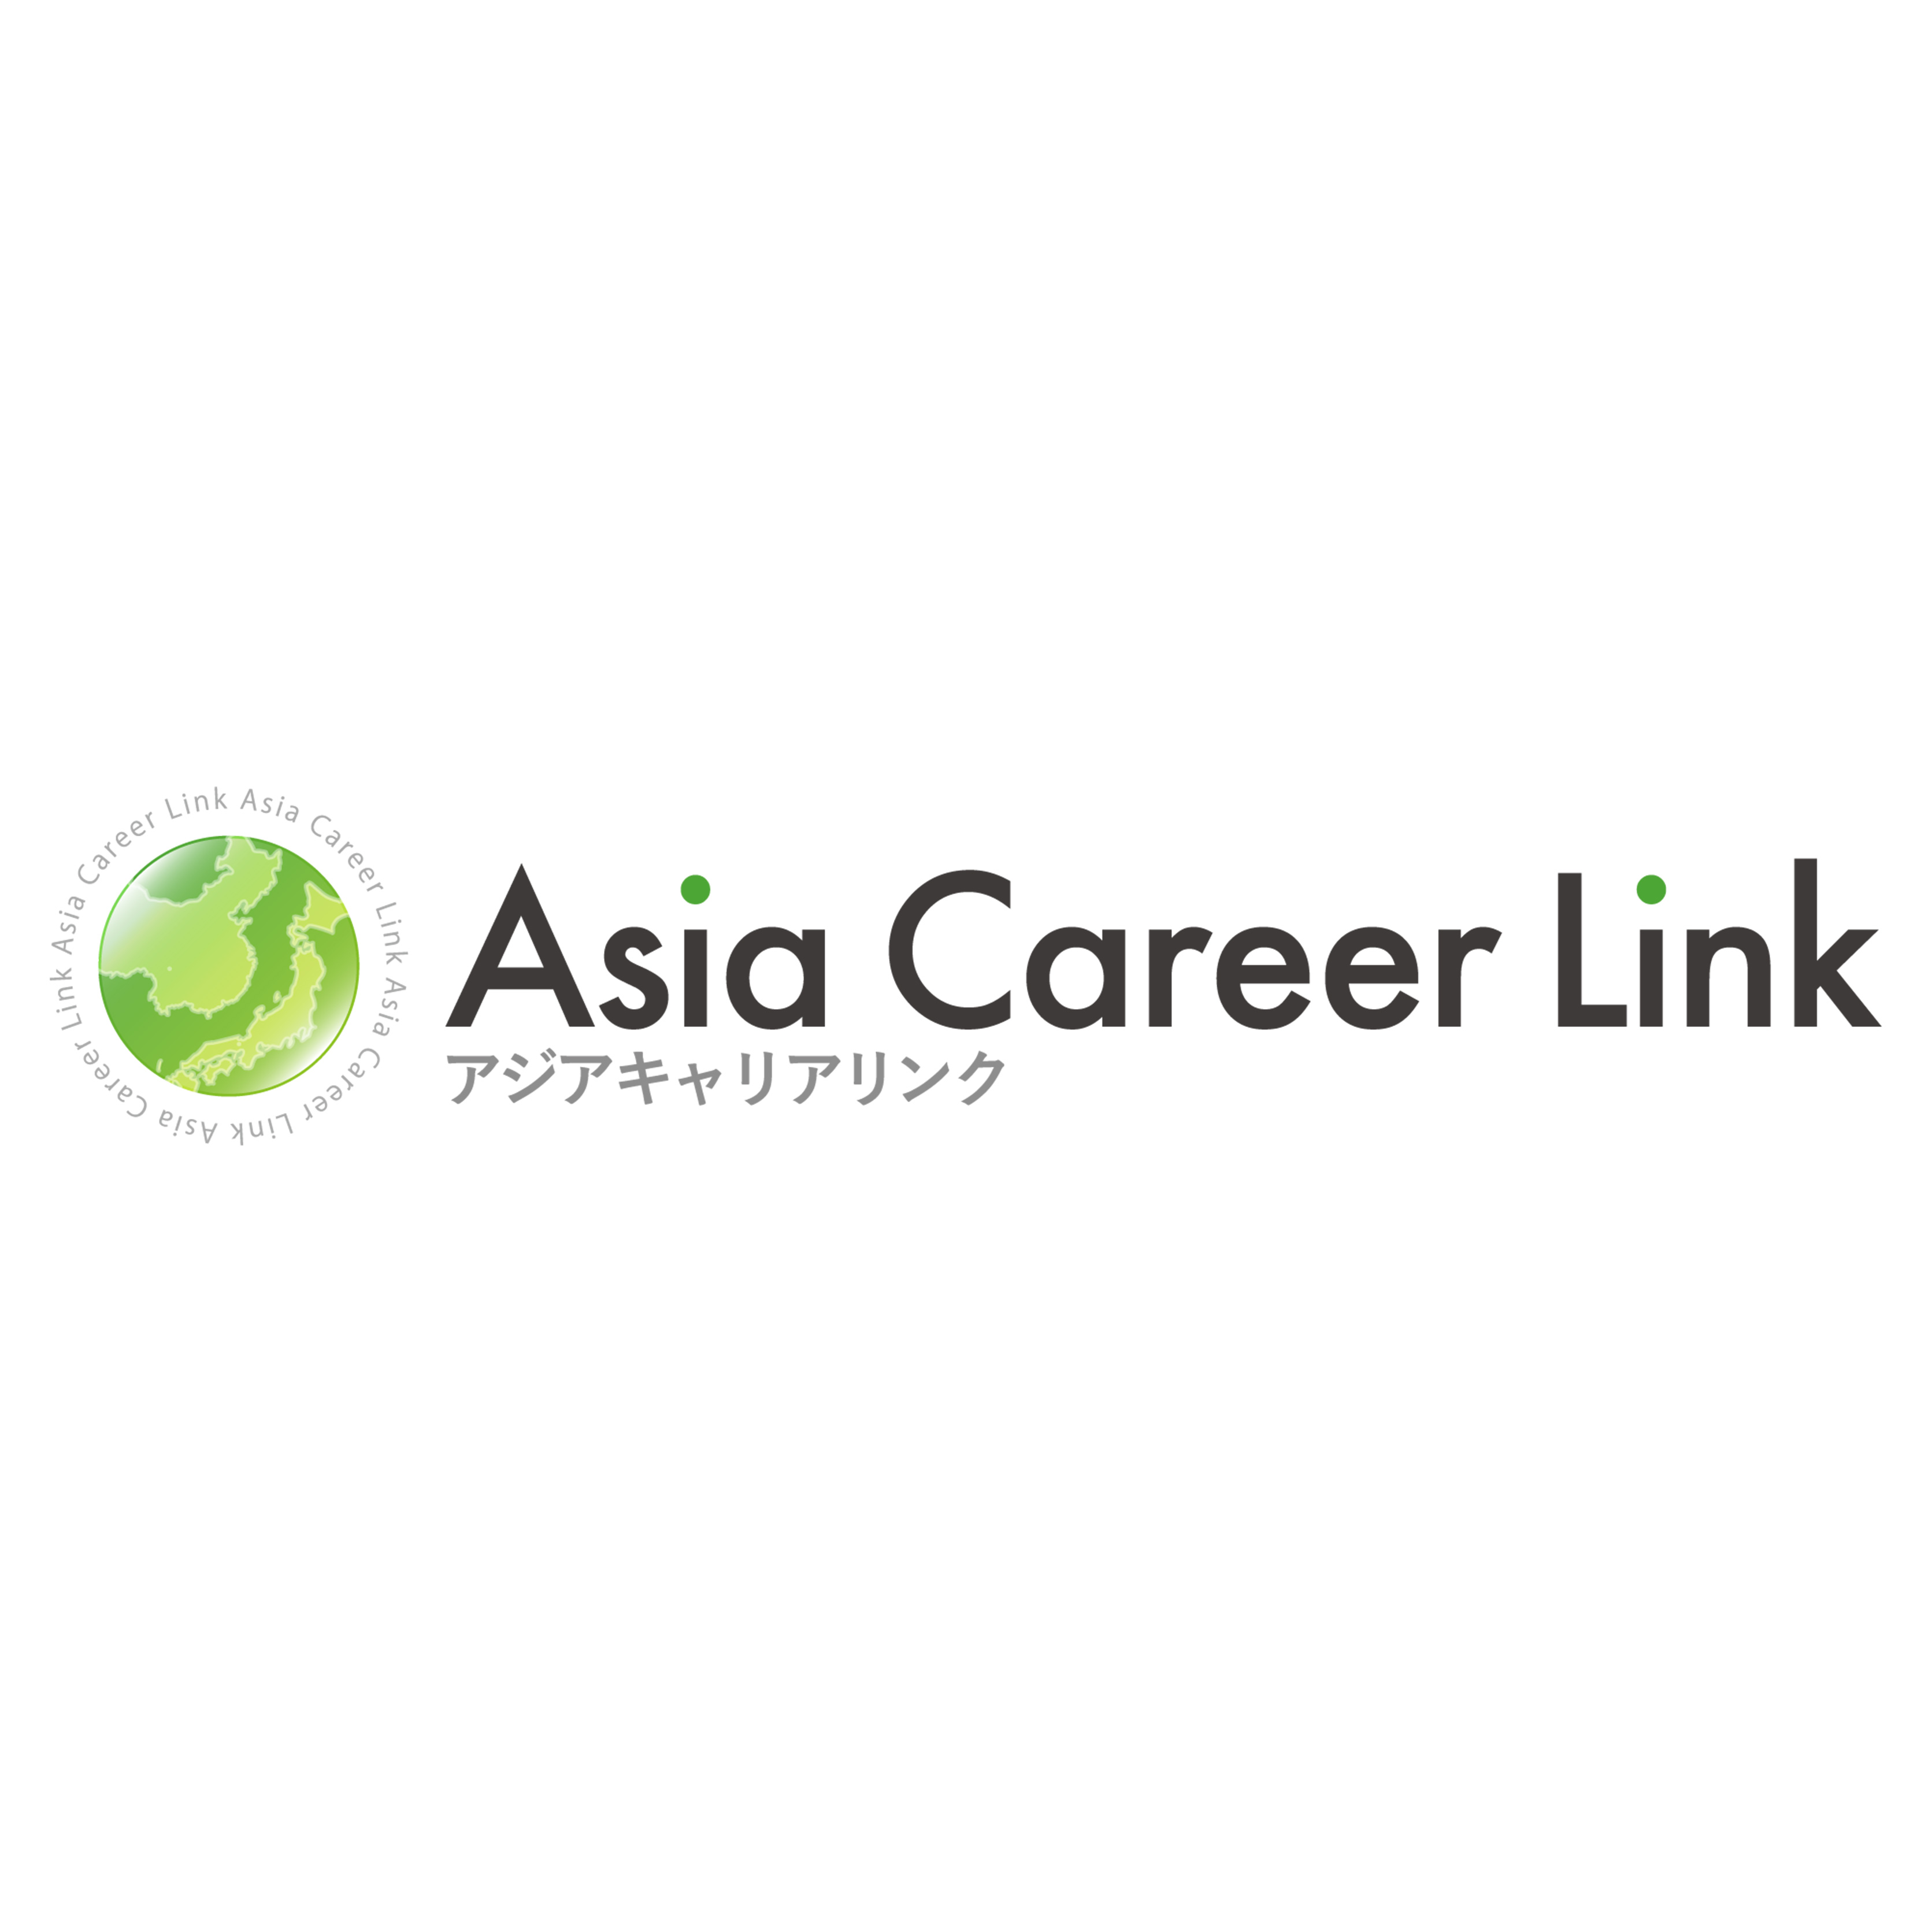 Asia Career Link